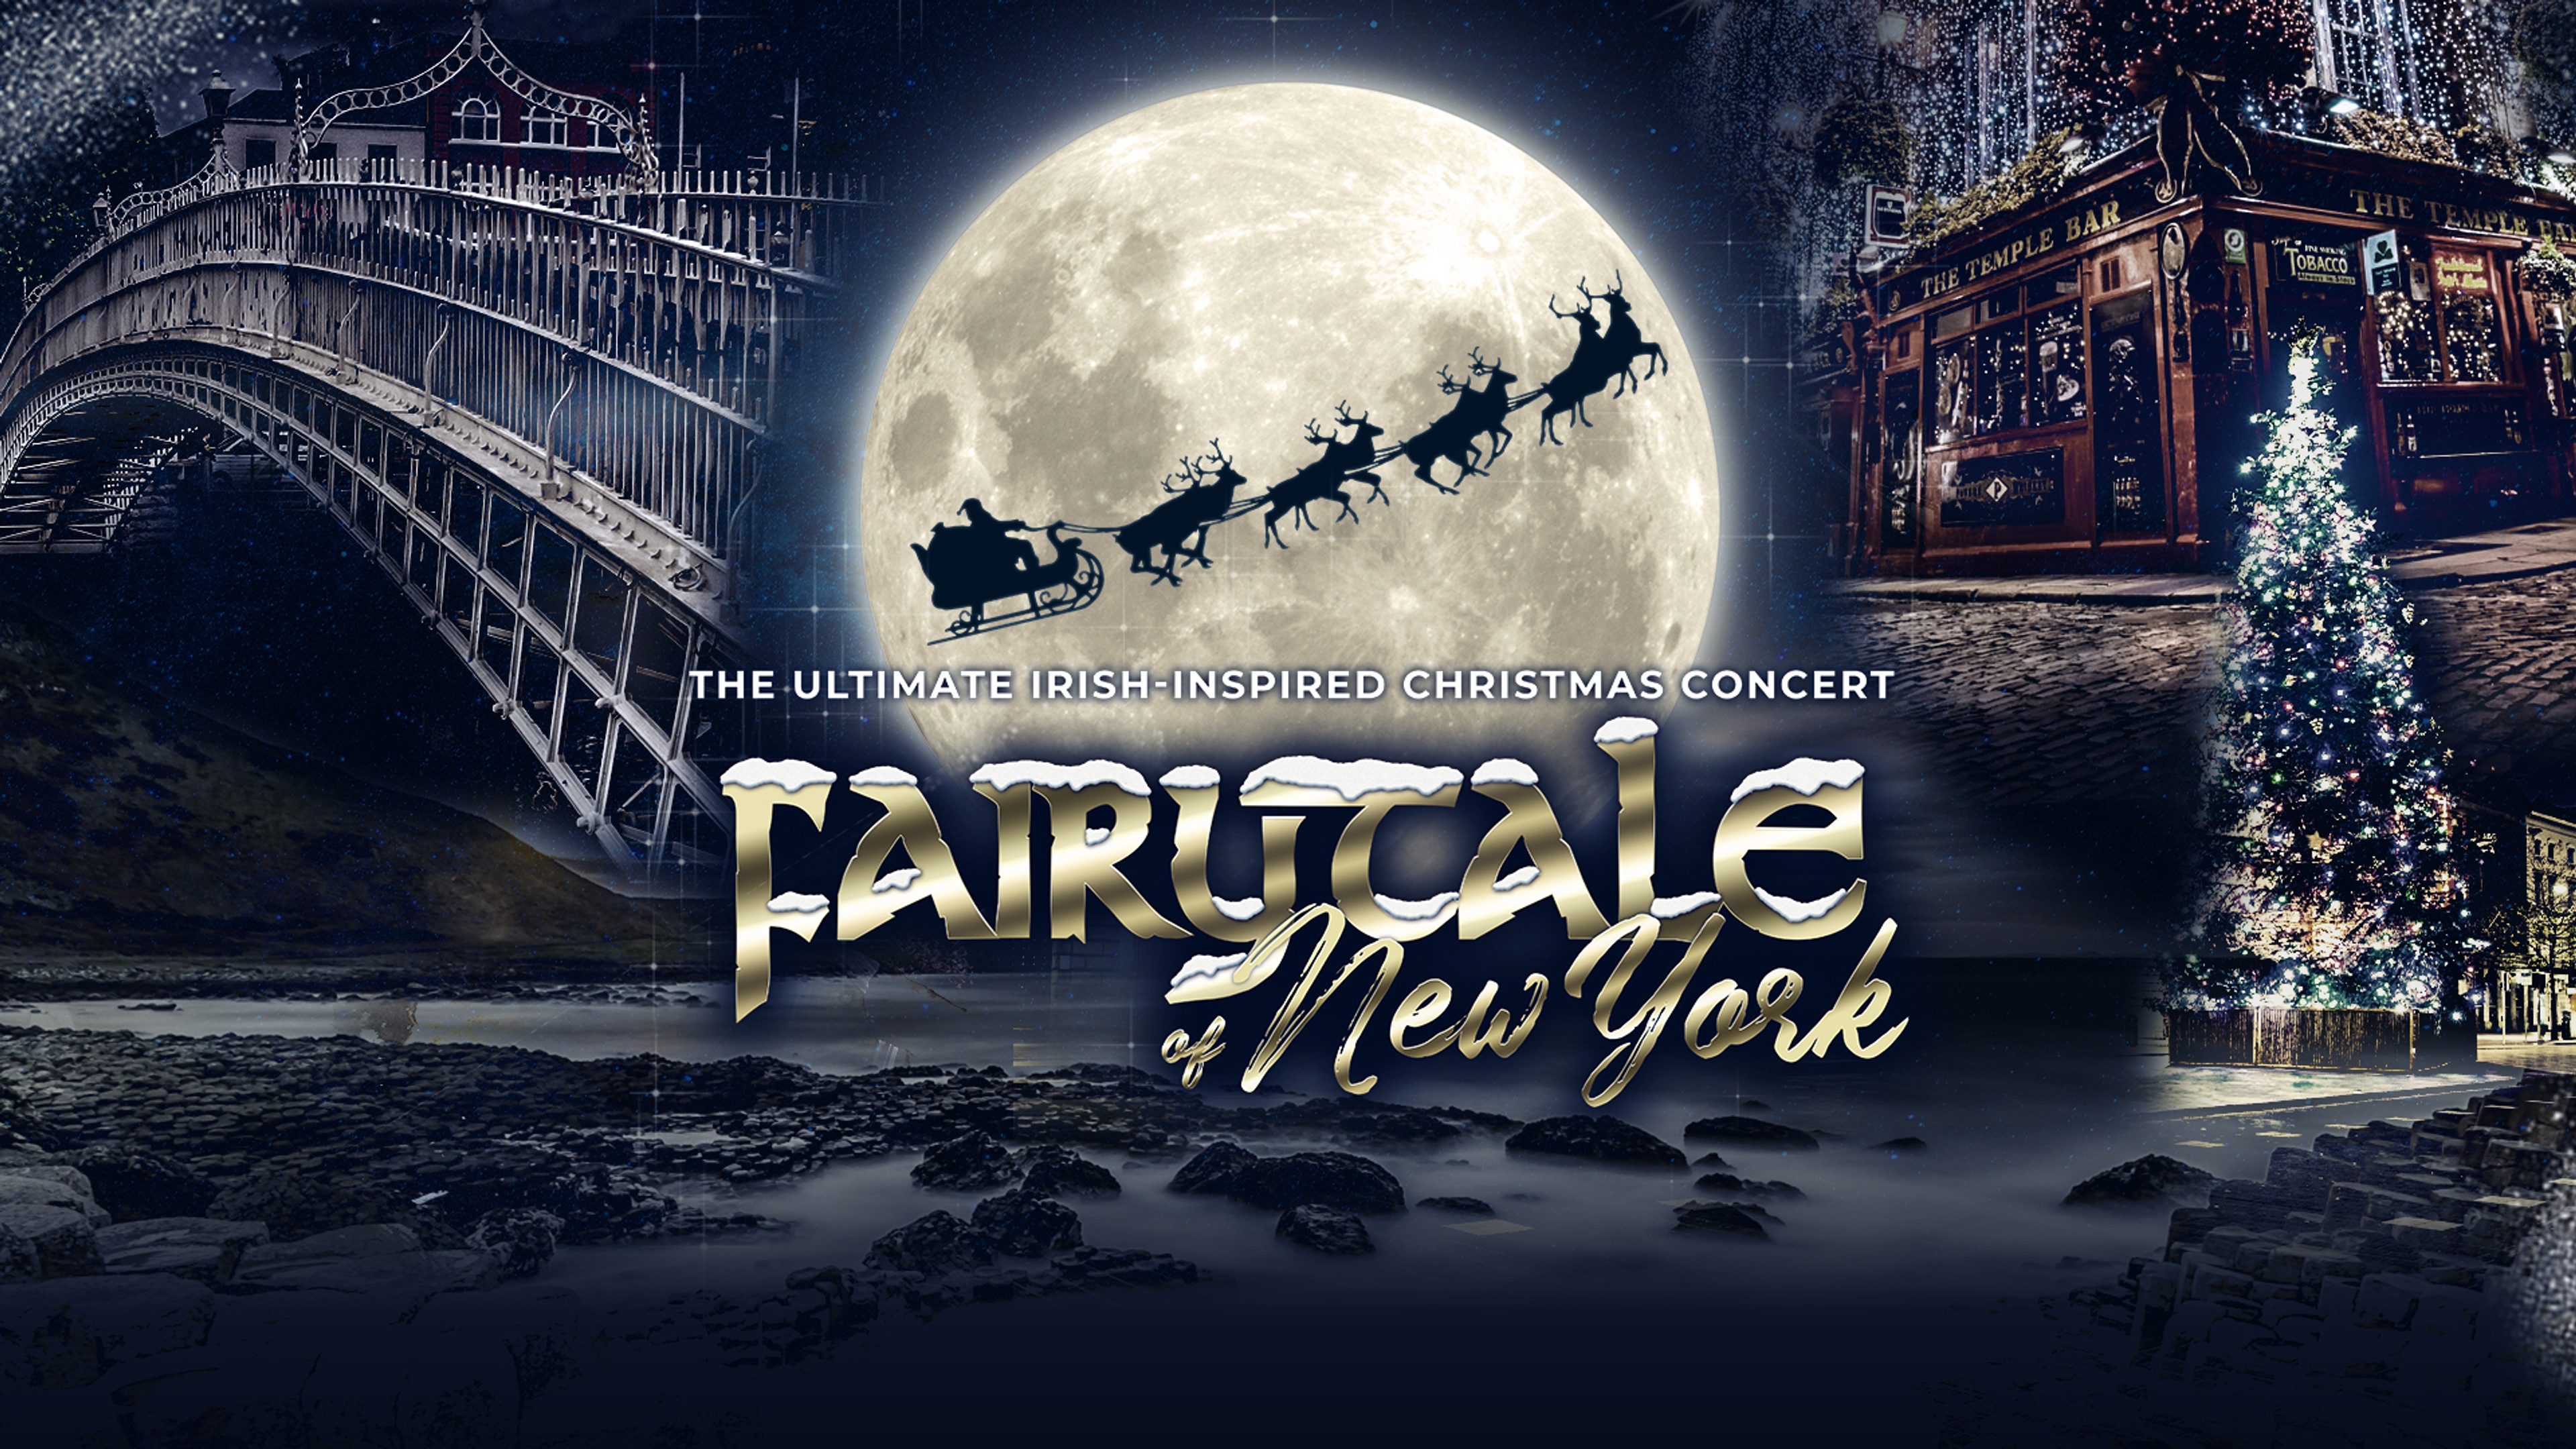 Skuggan av tomte i släde dragen av renar framför en stor måne. Text: The ultimate irish-inspired christmas concert, Fairytale of New York 